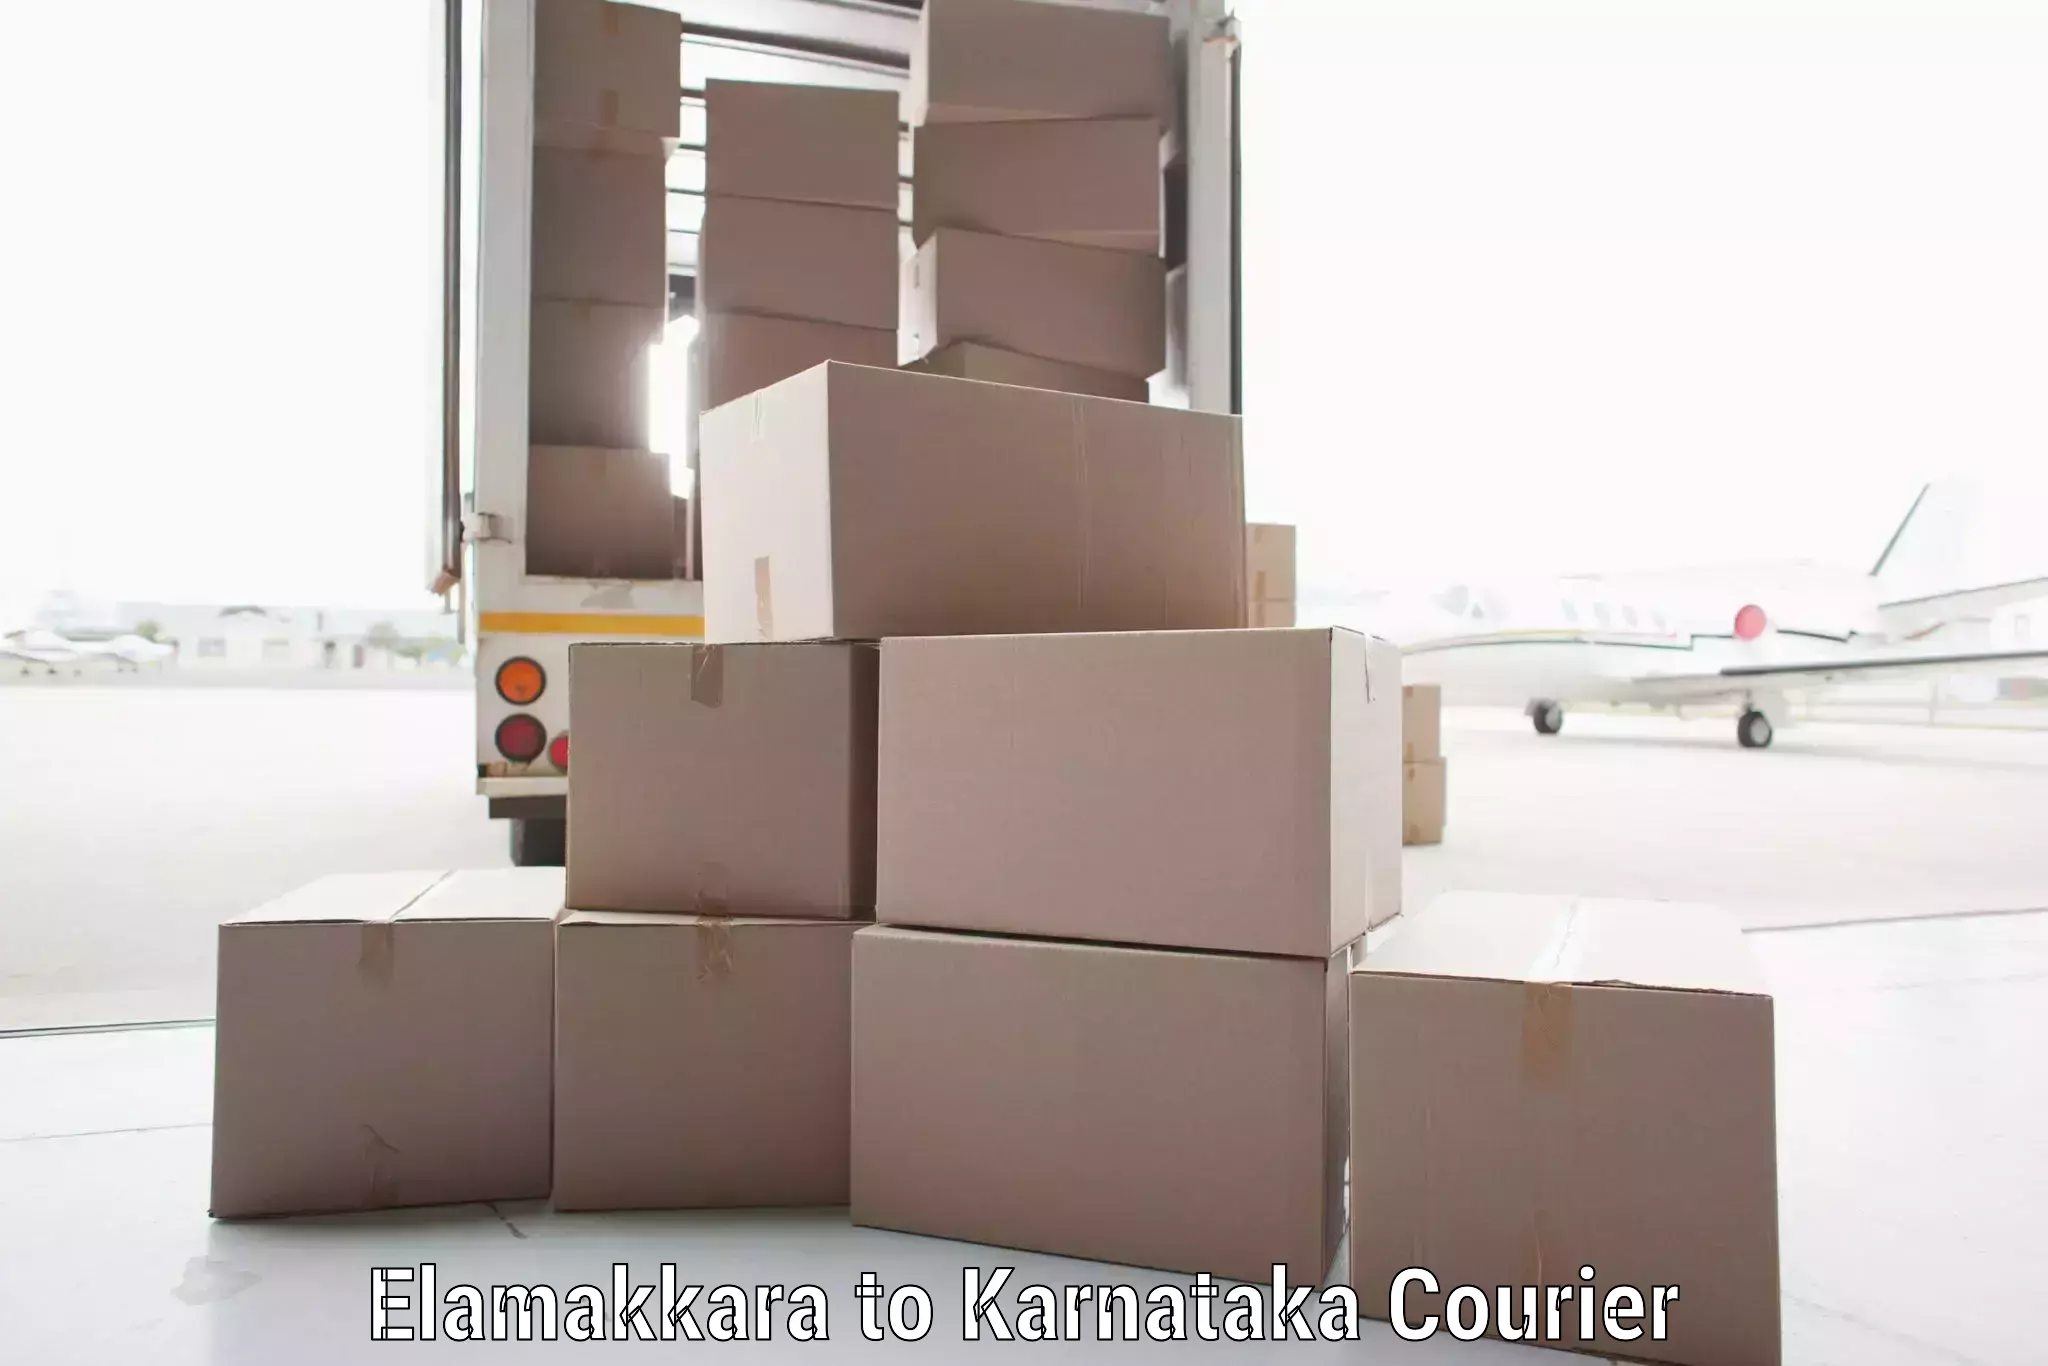 Global shipping networks Elamakkara to Puttur